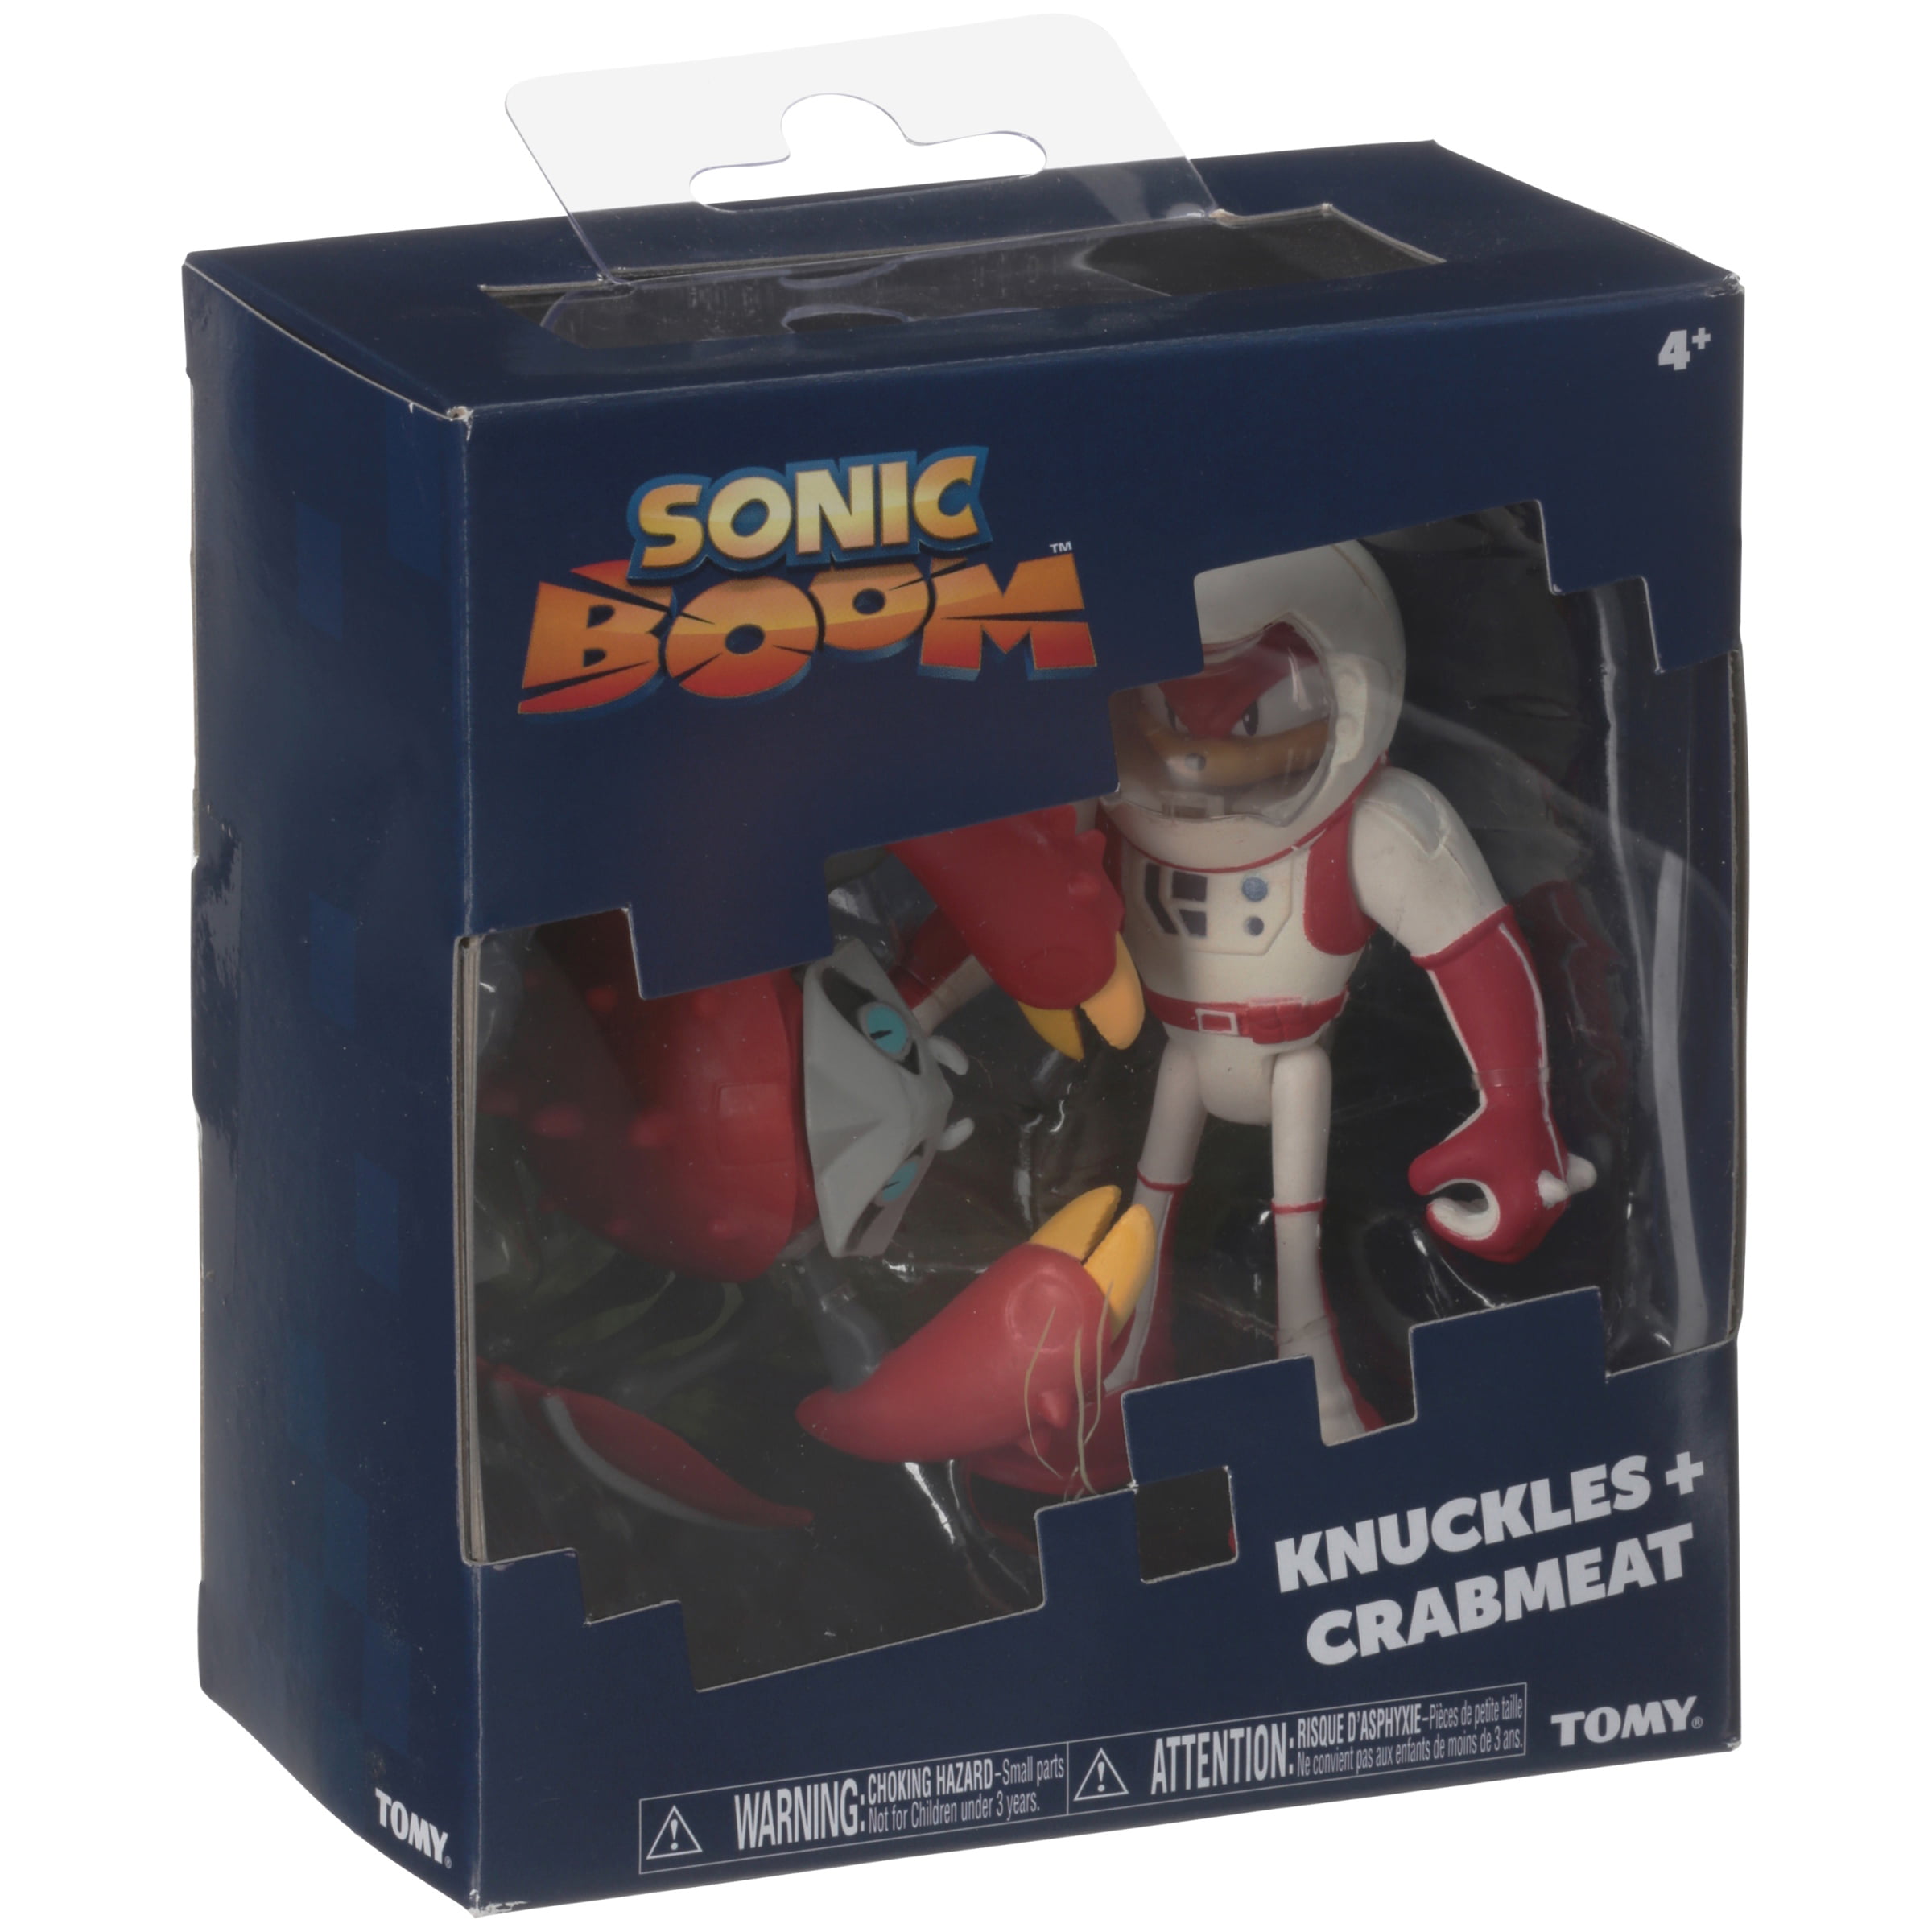 Boneco Tomy Sonic Boom Knuckles+crabmeat T22045